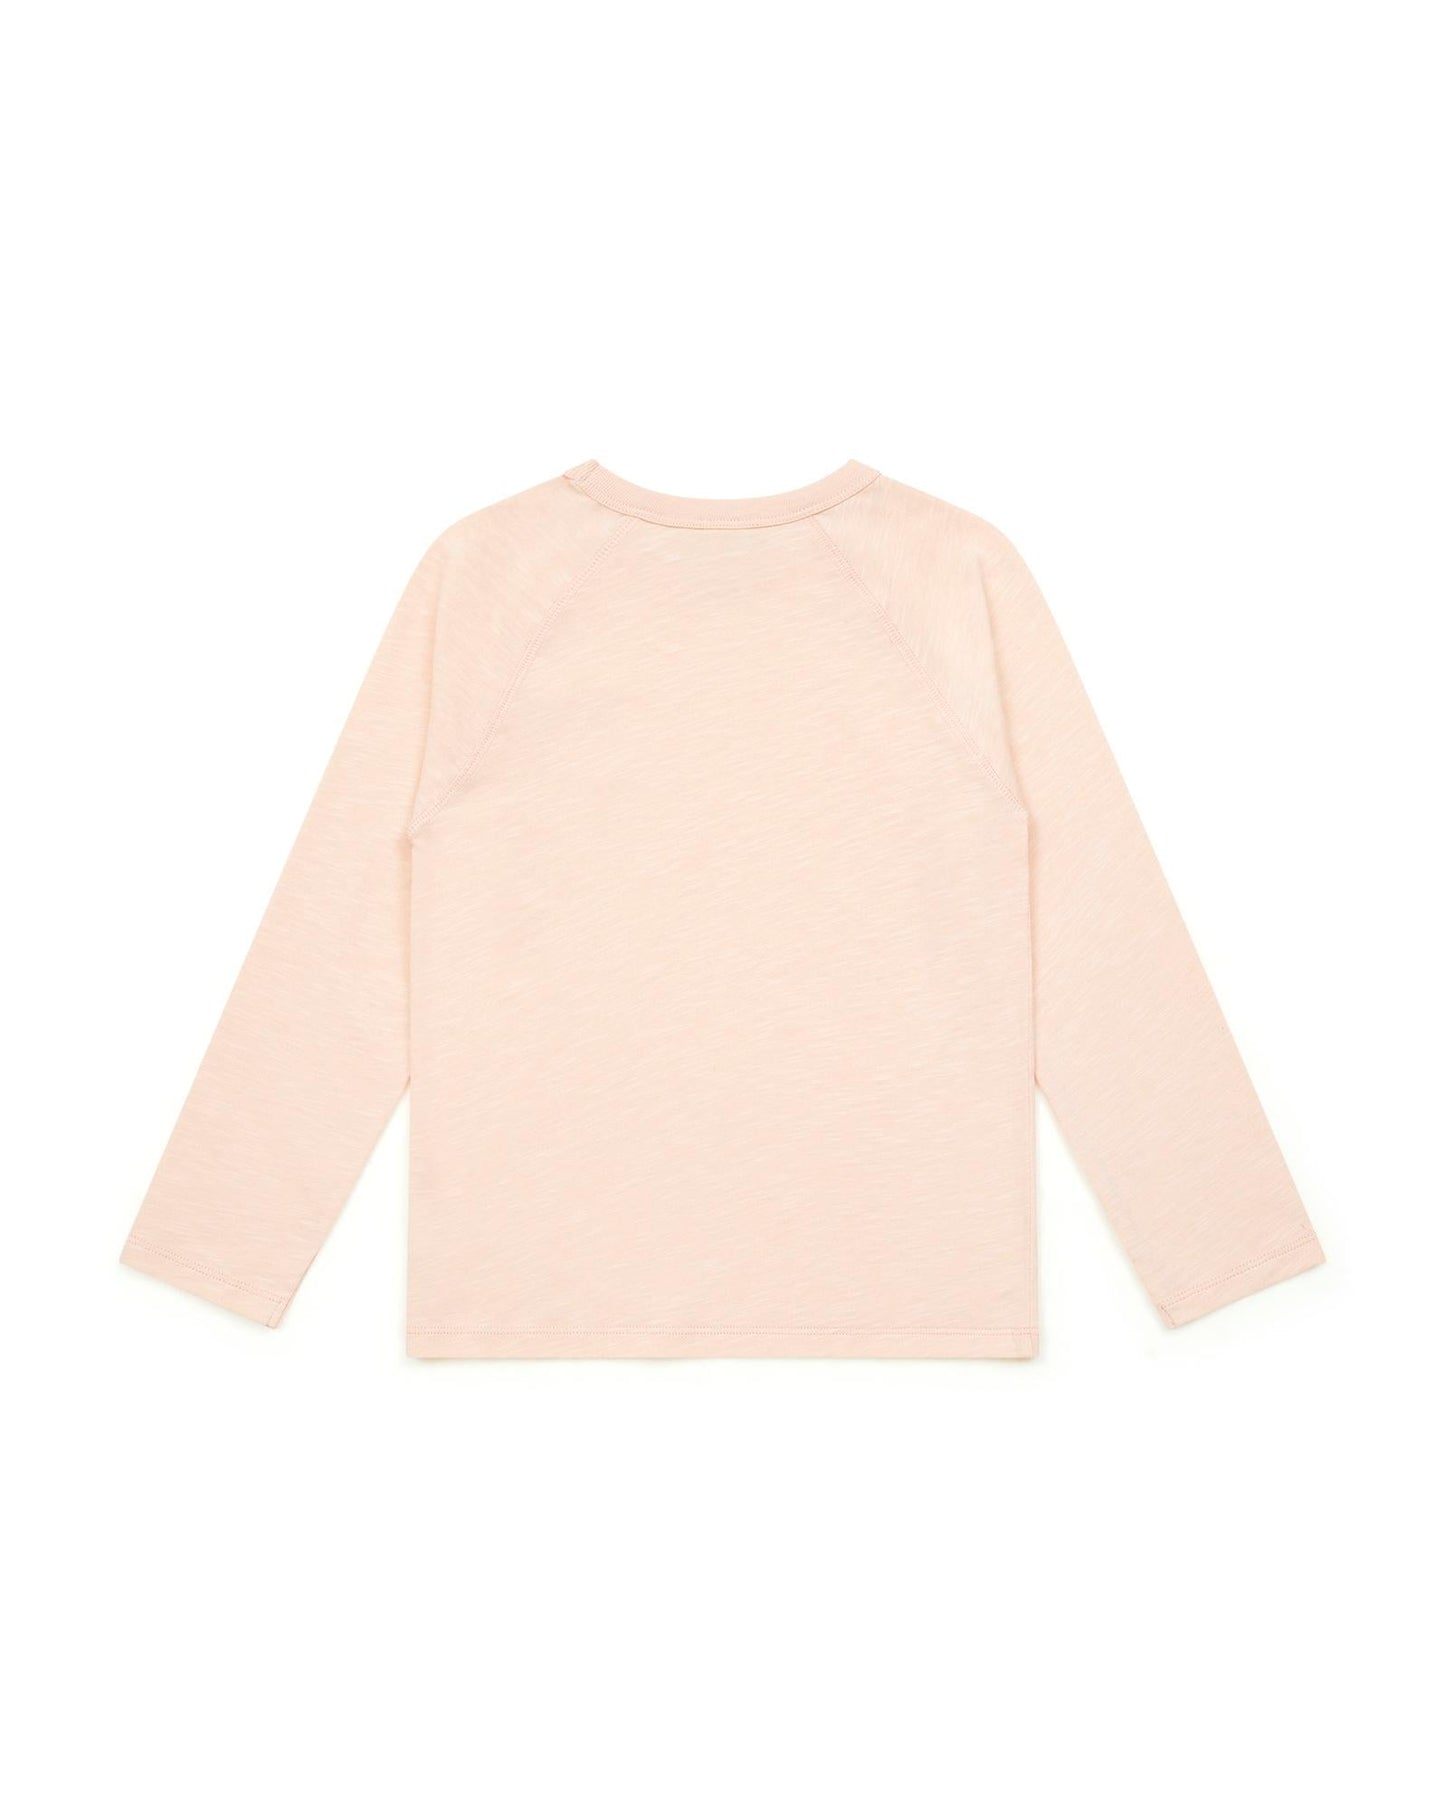 T -shirt - Badge Pink in 100% organic cotton certified GOTS